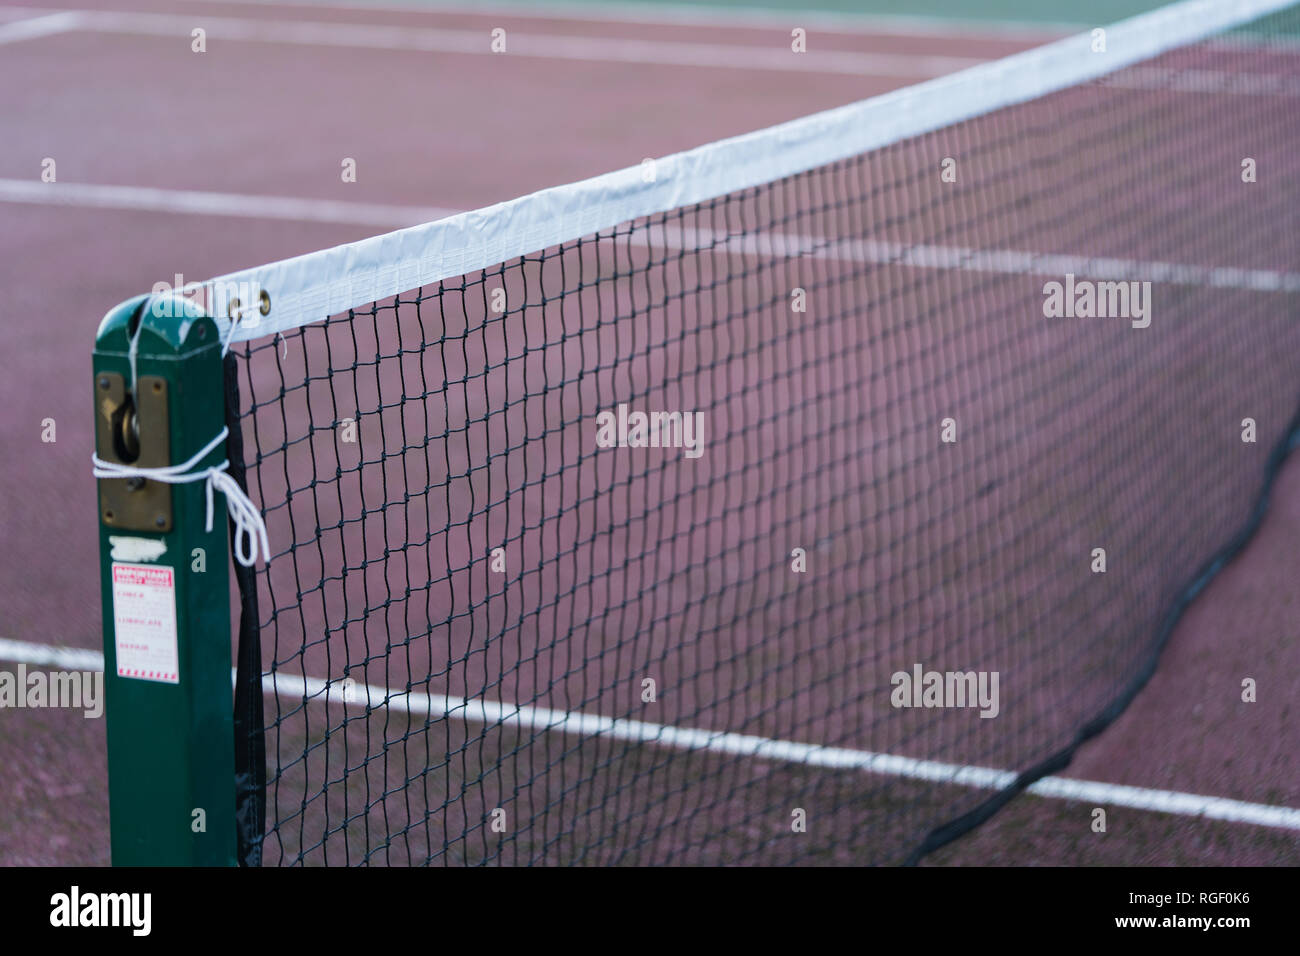 Close-up of a Tennis Court Net Stock Photo